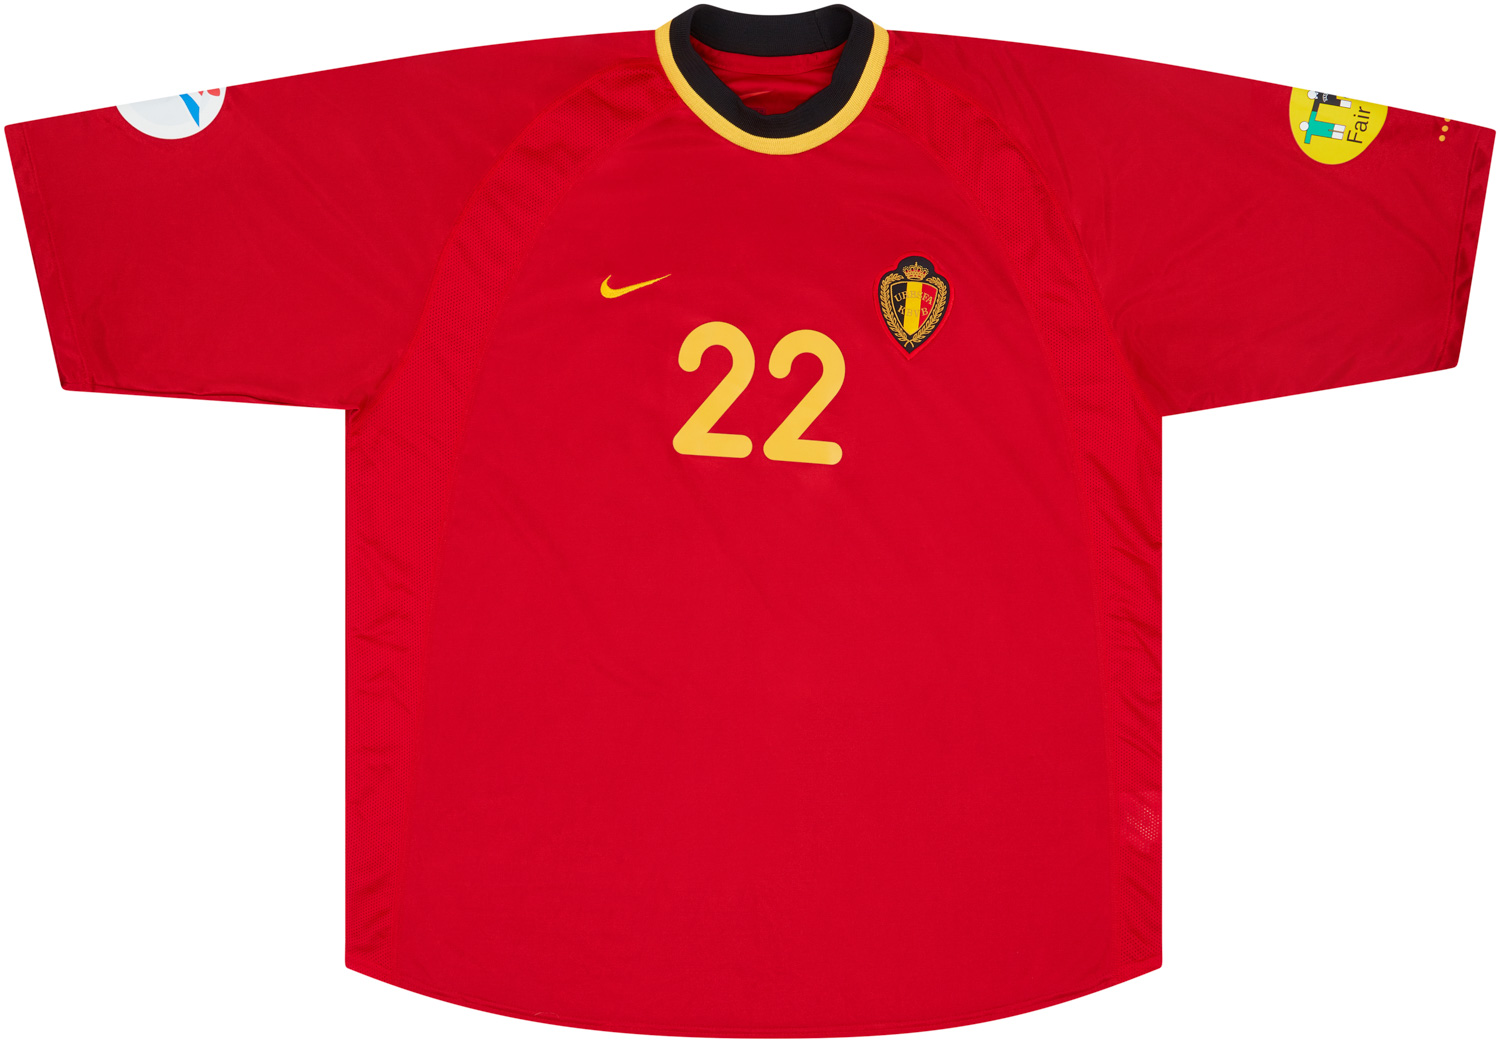 Set Flock Nameset home Trikot jersey shirt Belgien Belgium Belgique 2002 